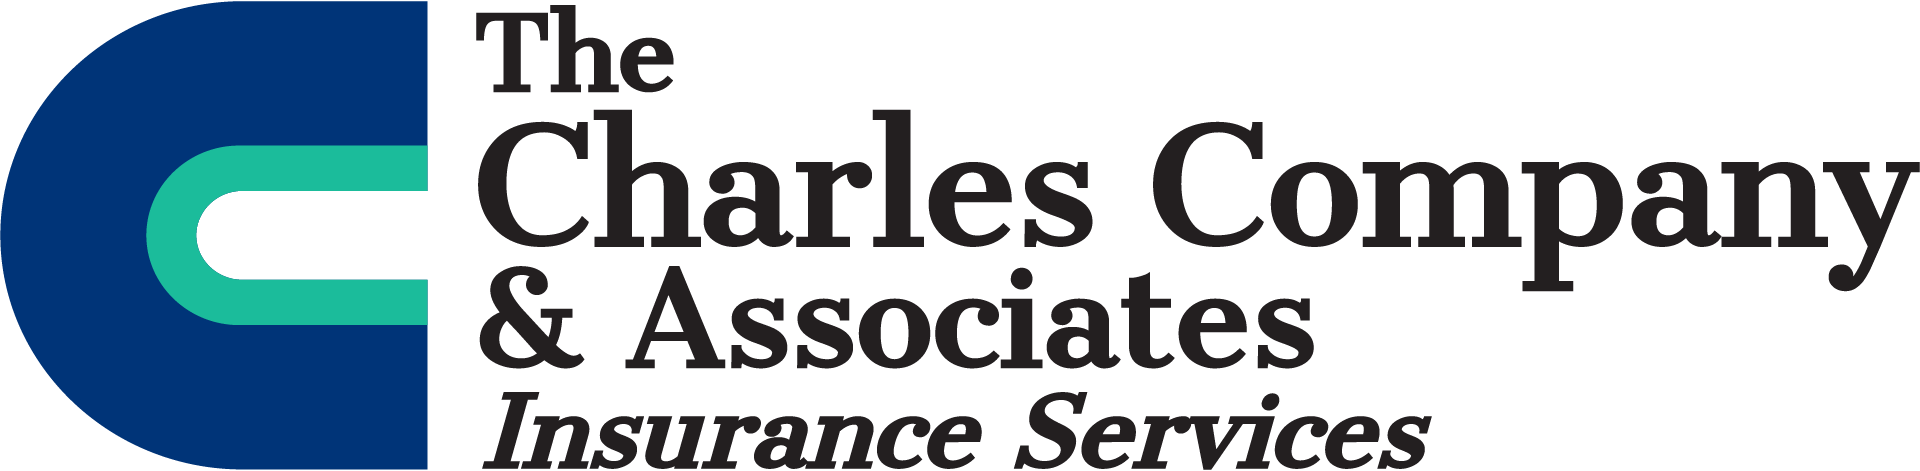 The Charles Company